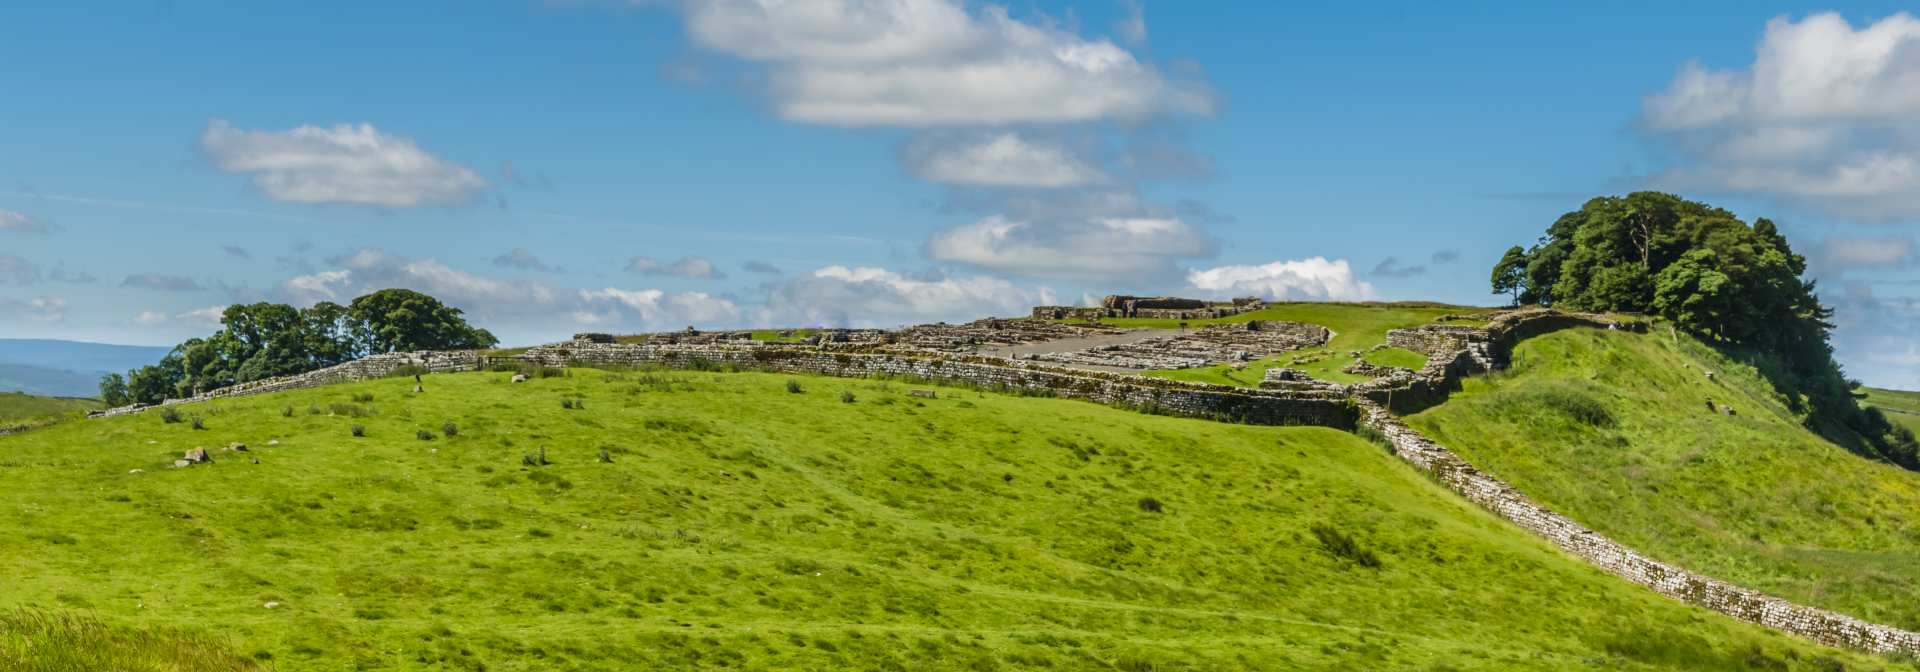 Hadrian's Wall Path - Housesteads - Nicholas Box - Landscape.jpg